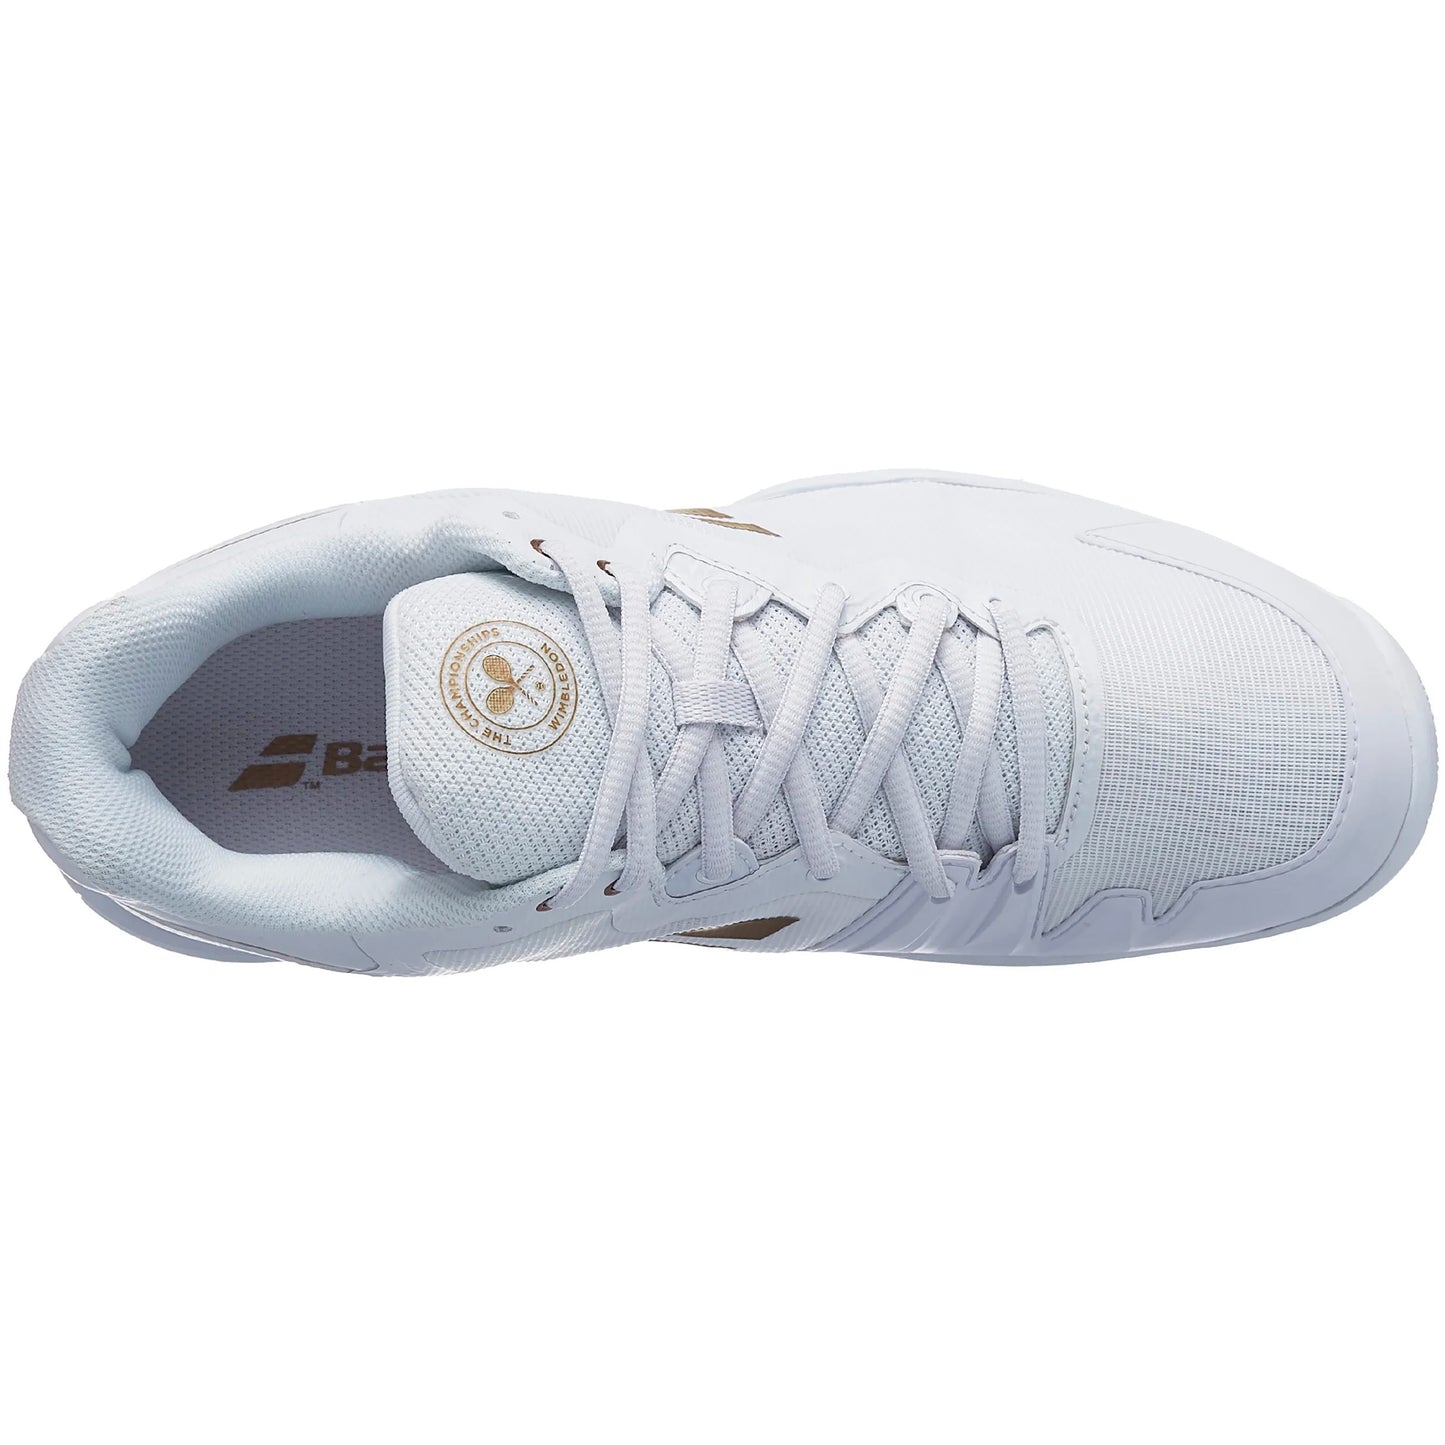 Babolat SFX3 AC Wimbledon men tennis shoes - White/Gold